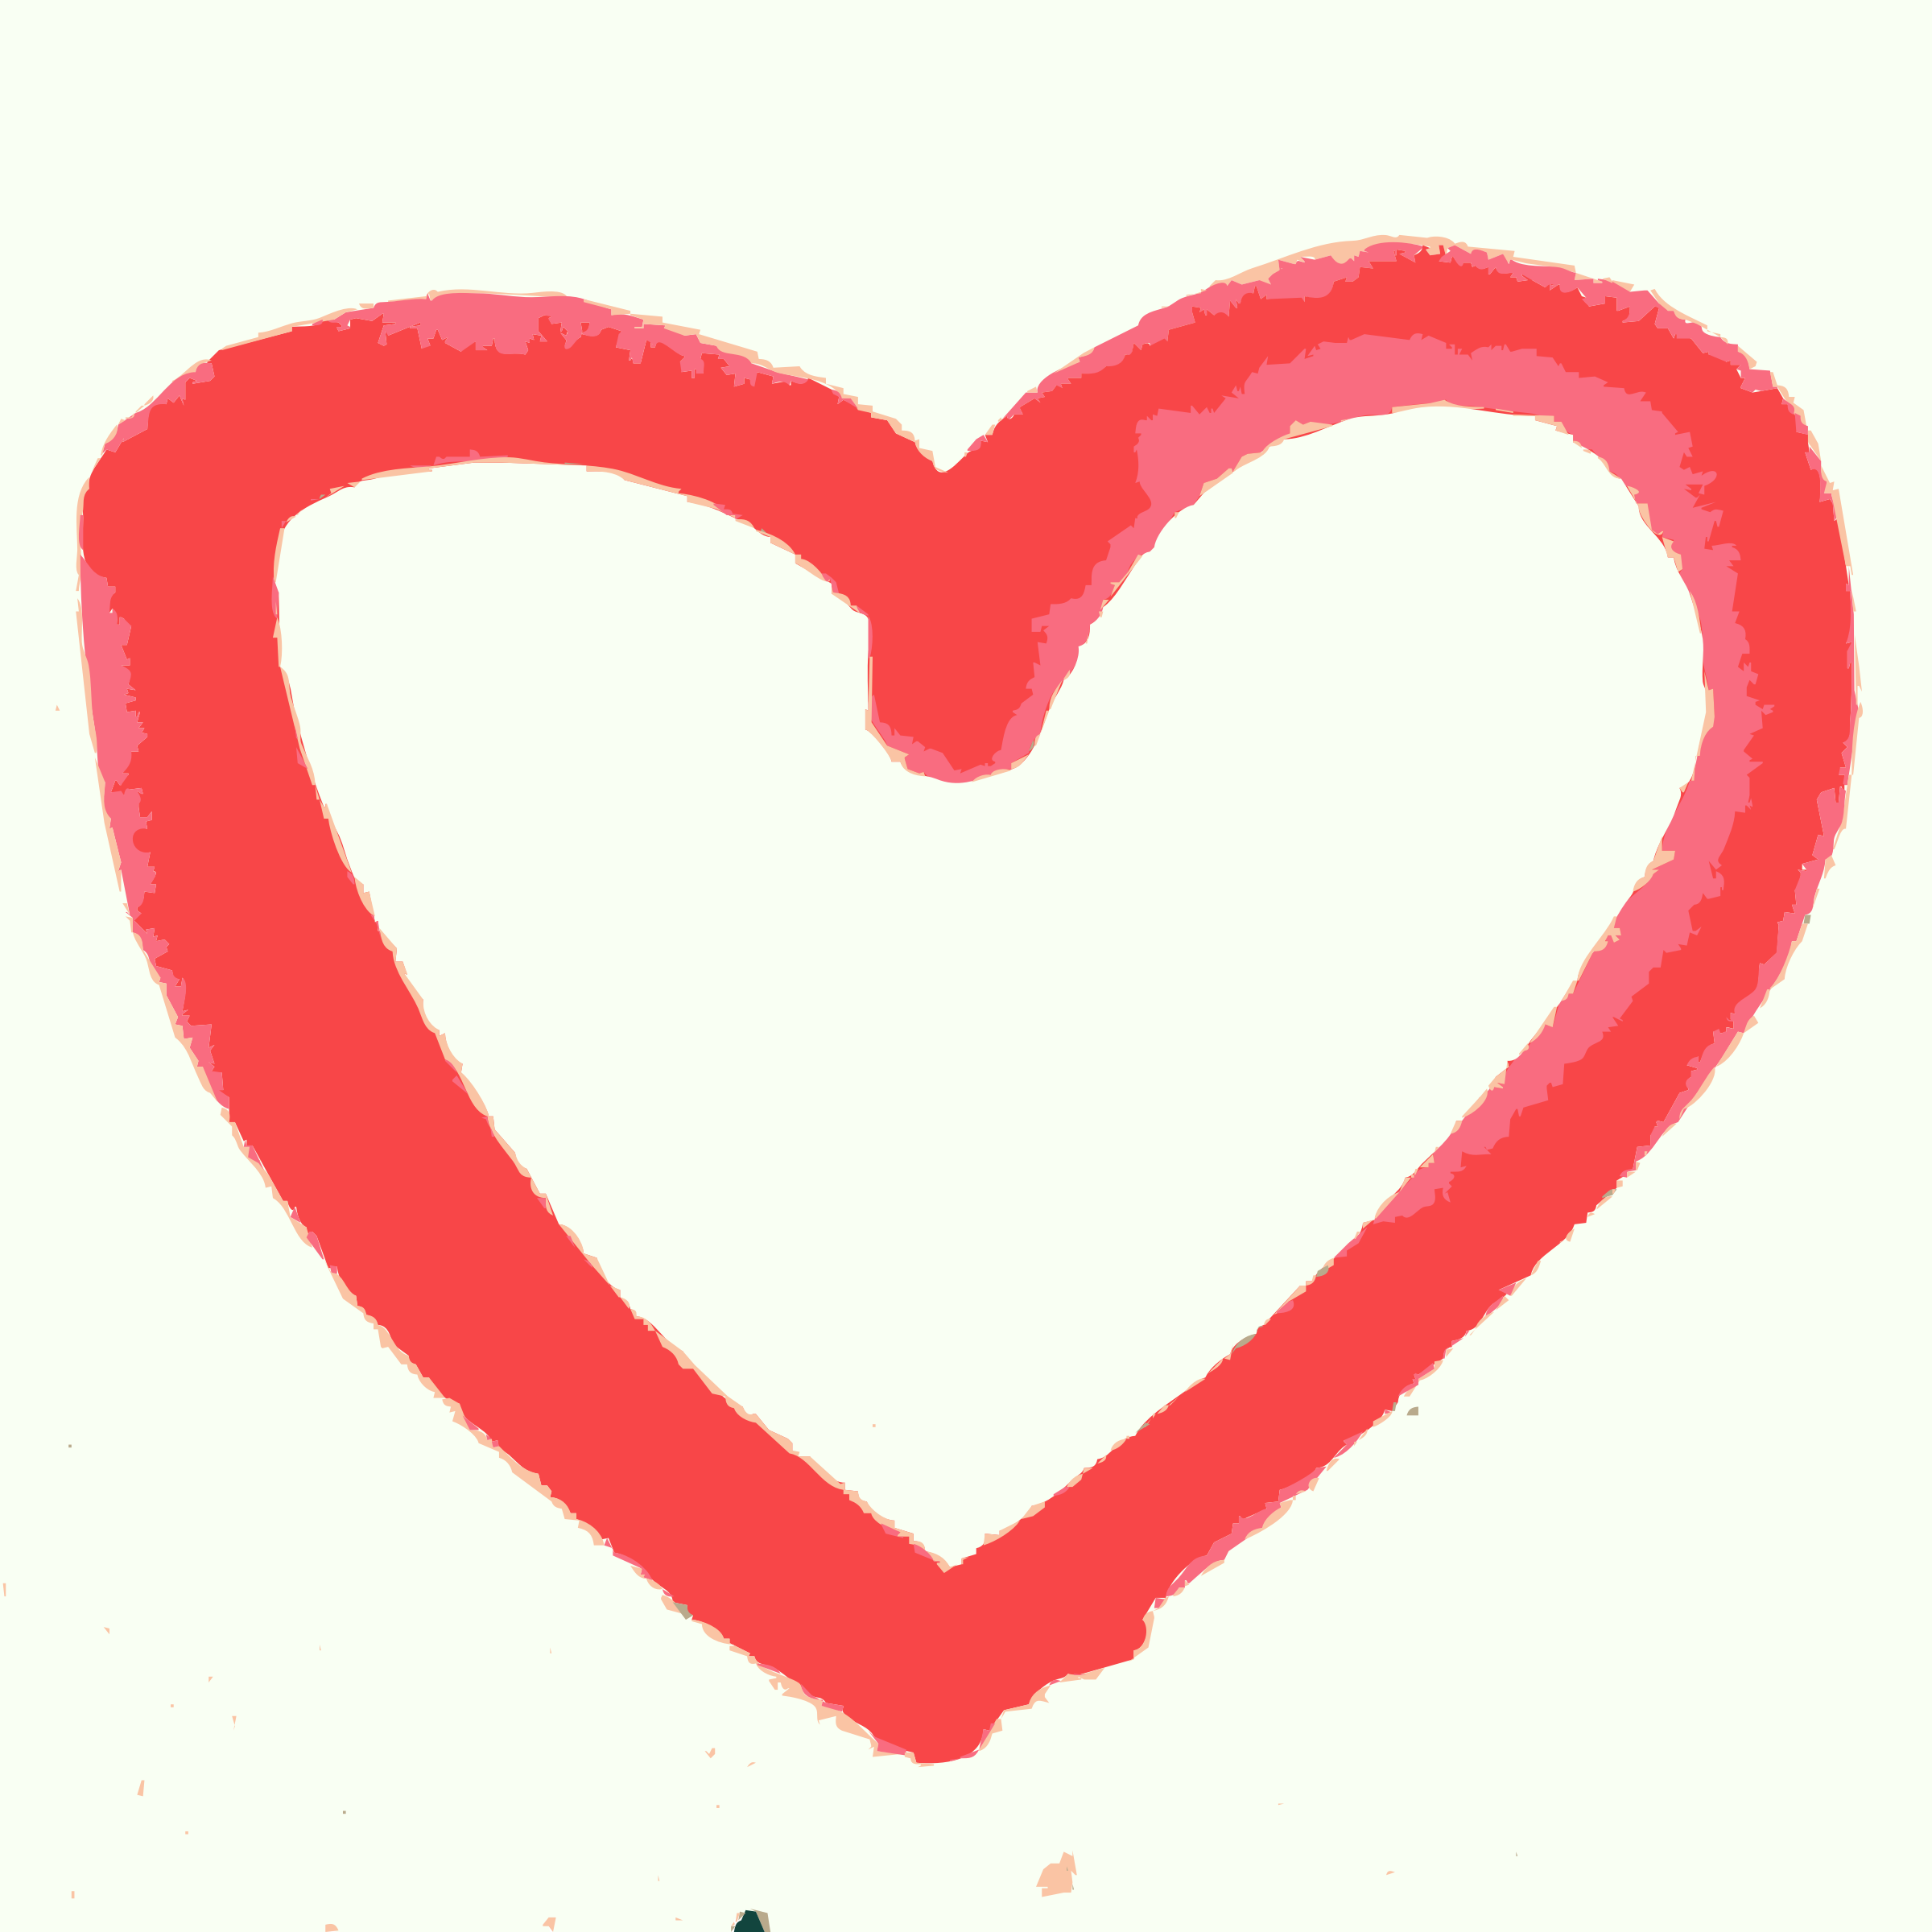 Hand Drawn Heart Vector Graphic - Free Public Domain Stock Photo